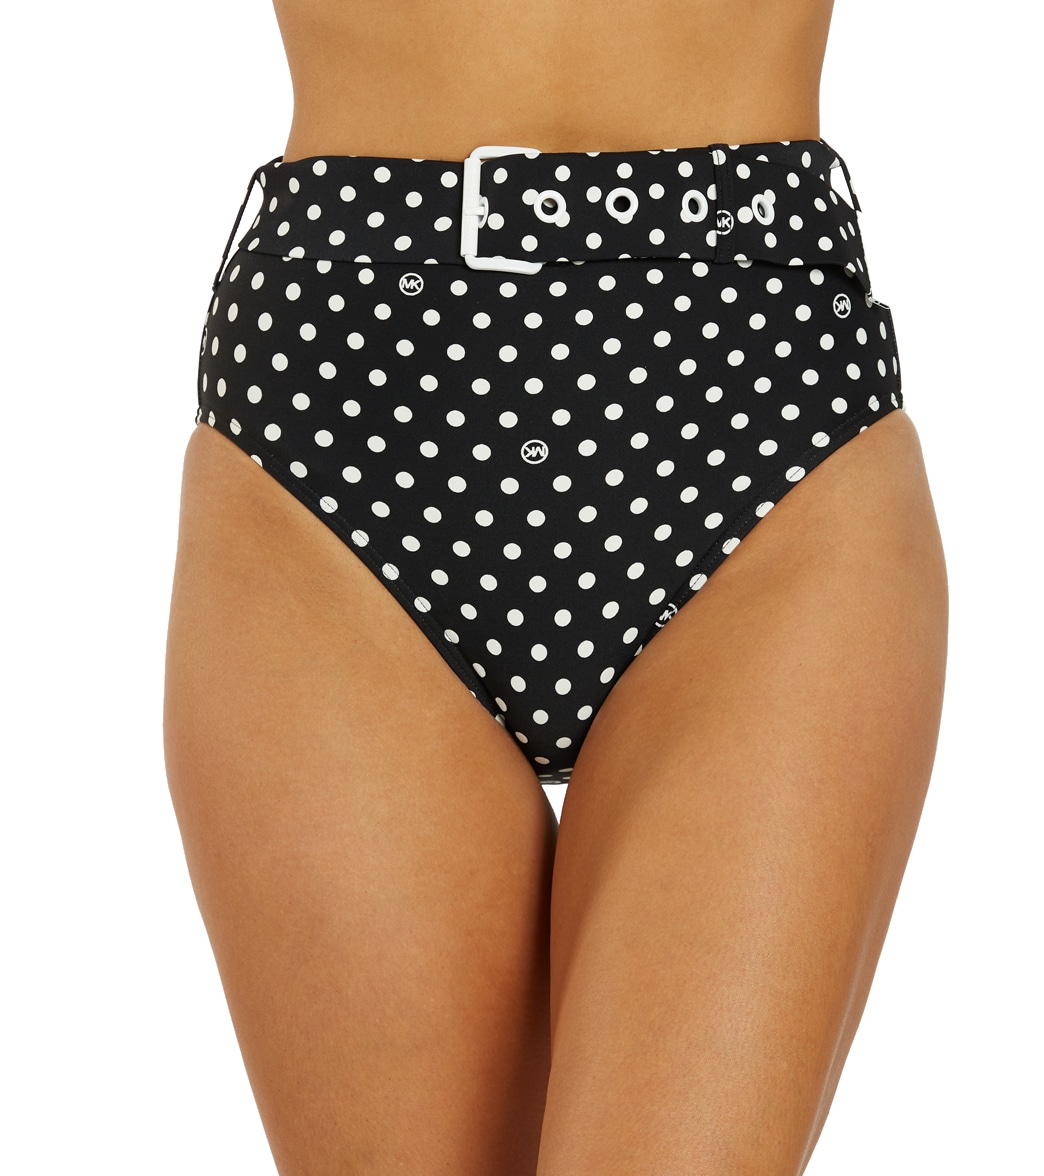 Michael Kors Women's Dot High Waist Belted Bikini Bottom - Black Large - Swimoutlet.com